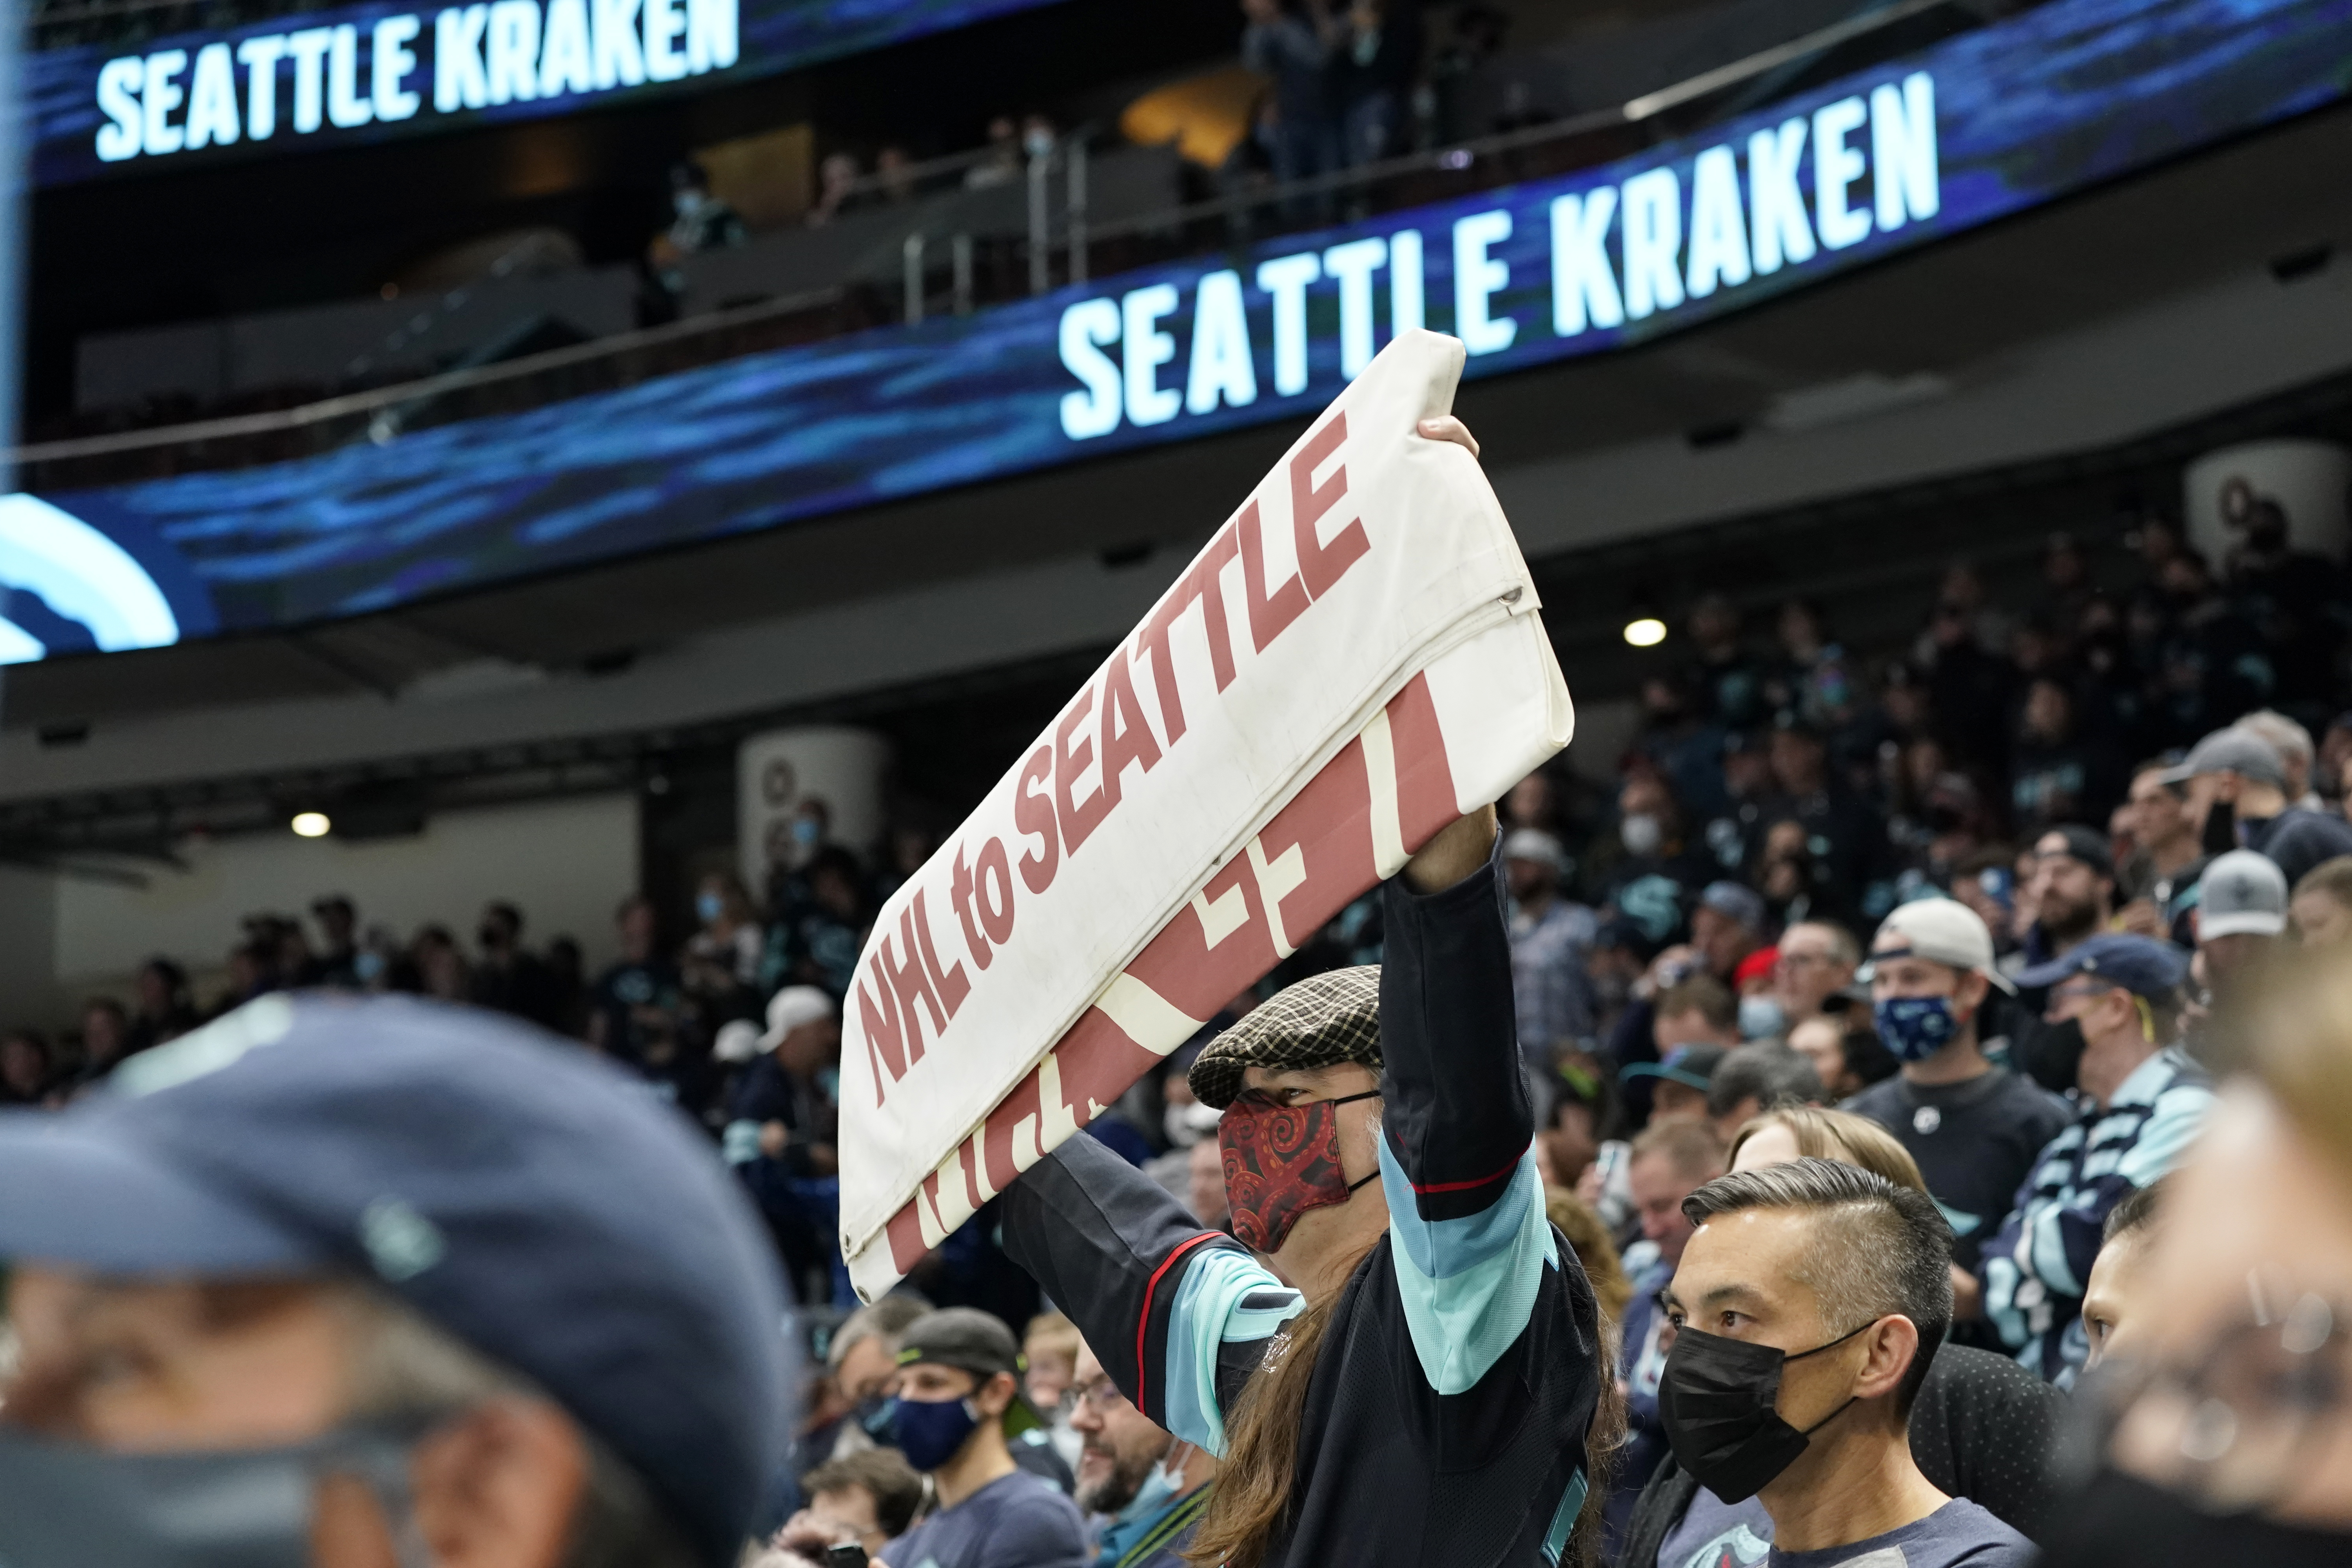 Seattle Kraken - A milestone worth celebrating! Get to Climate